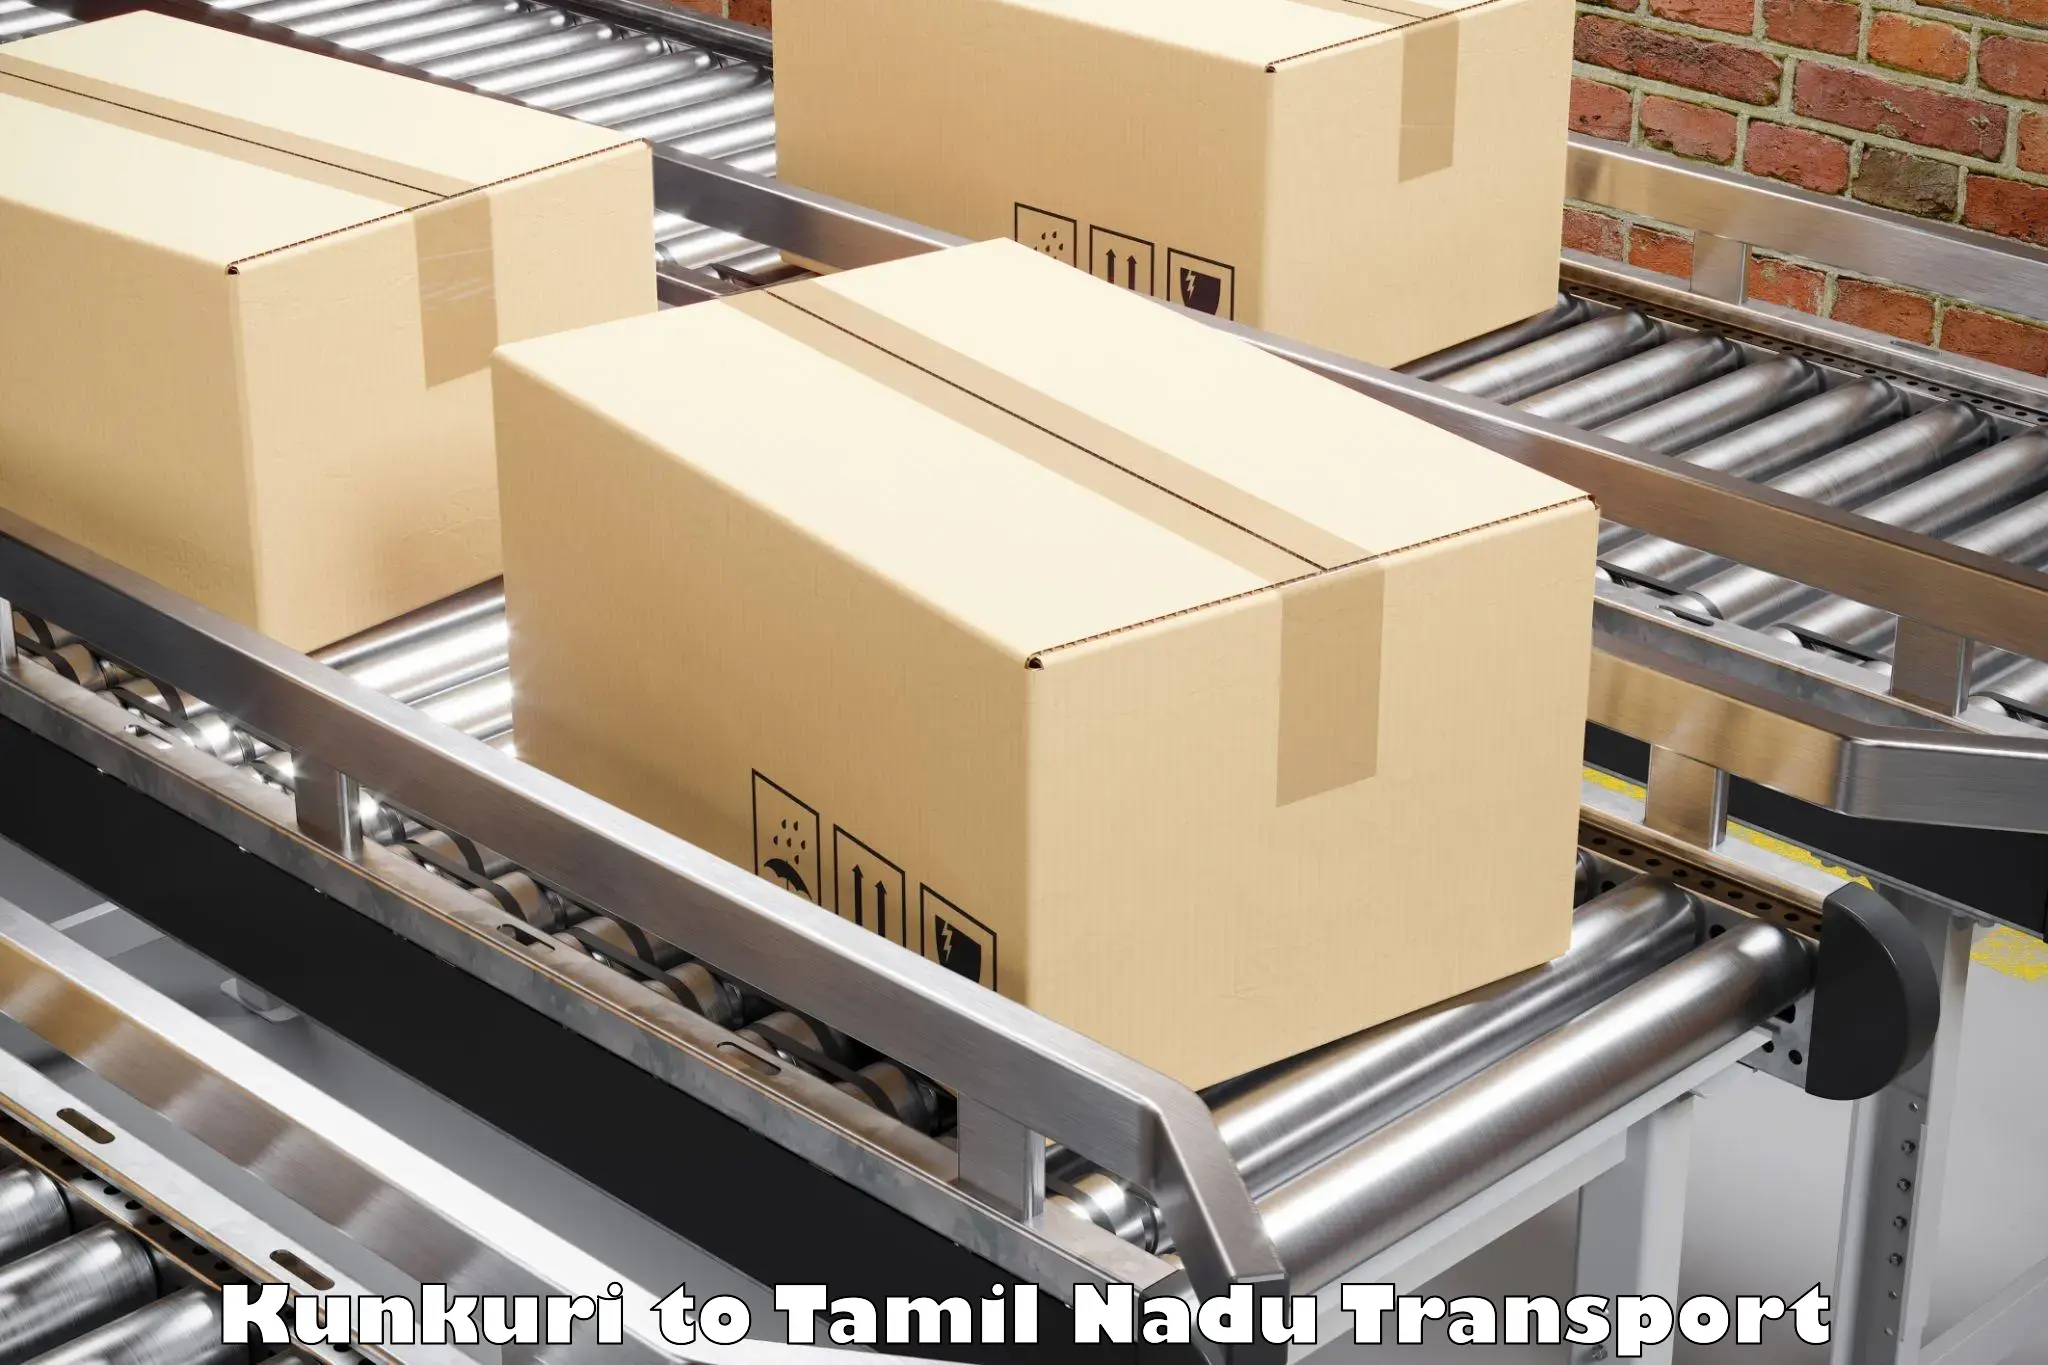 Container transport service Kunkuri to Tiruppur